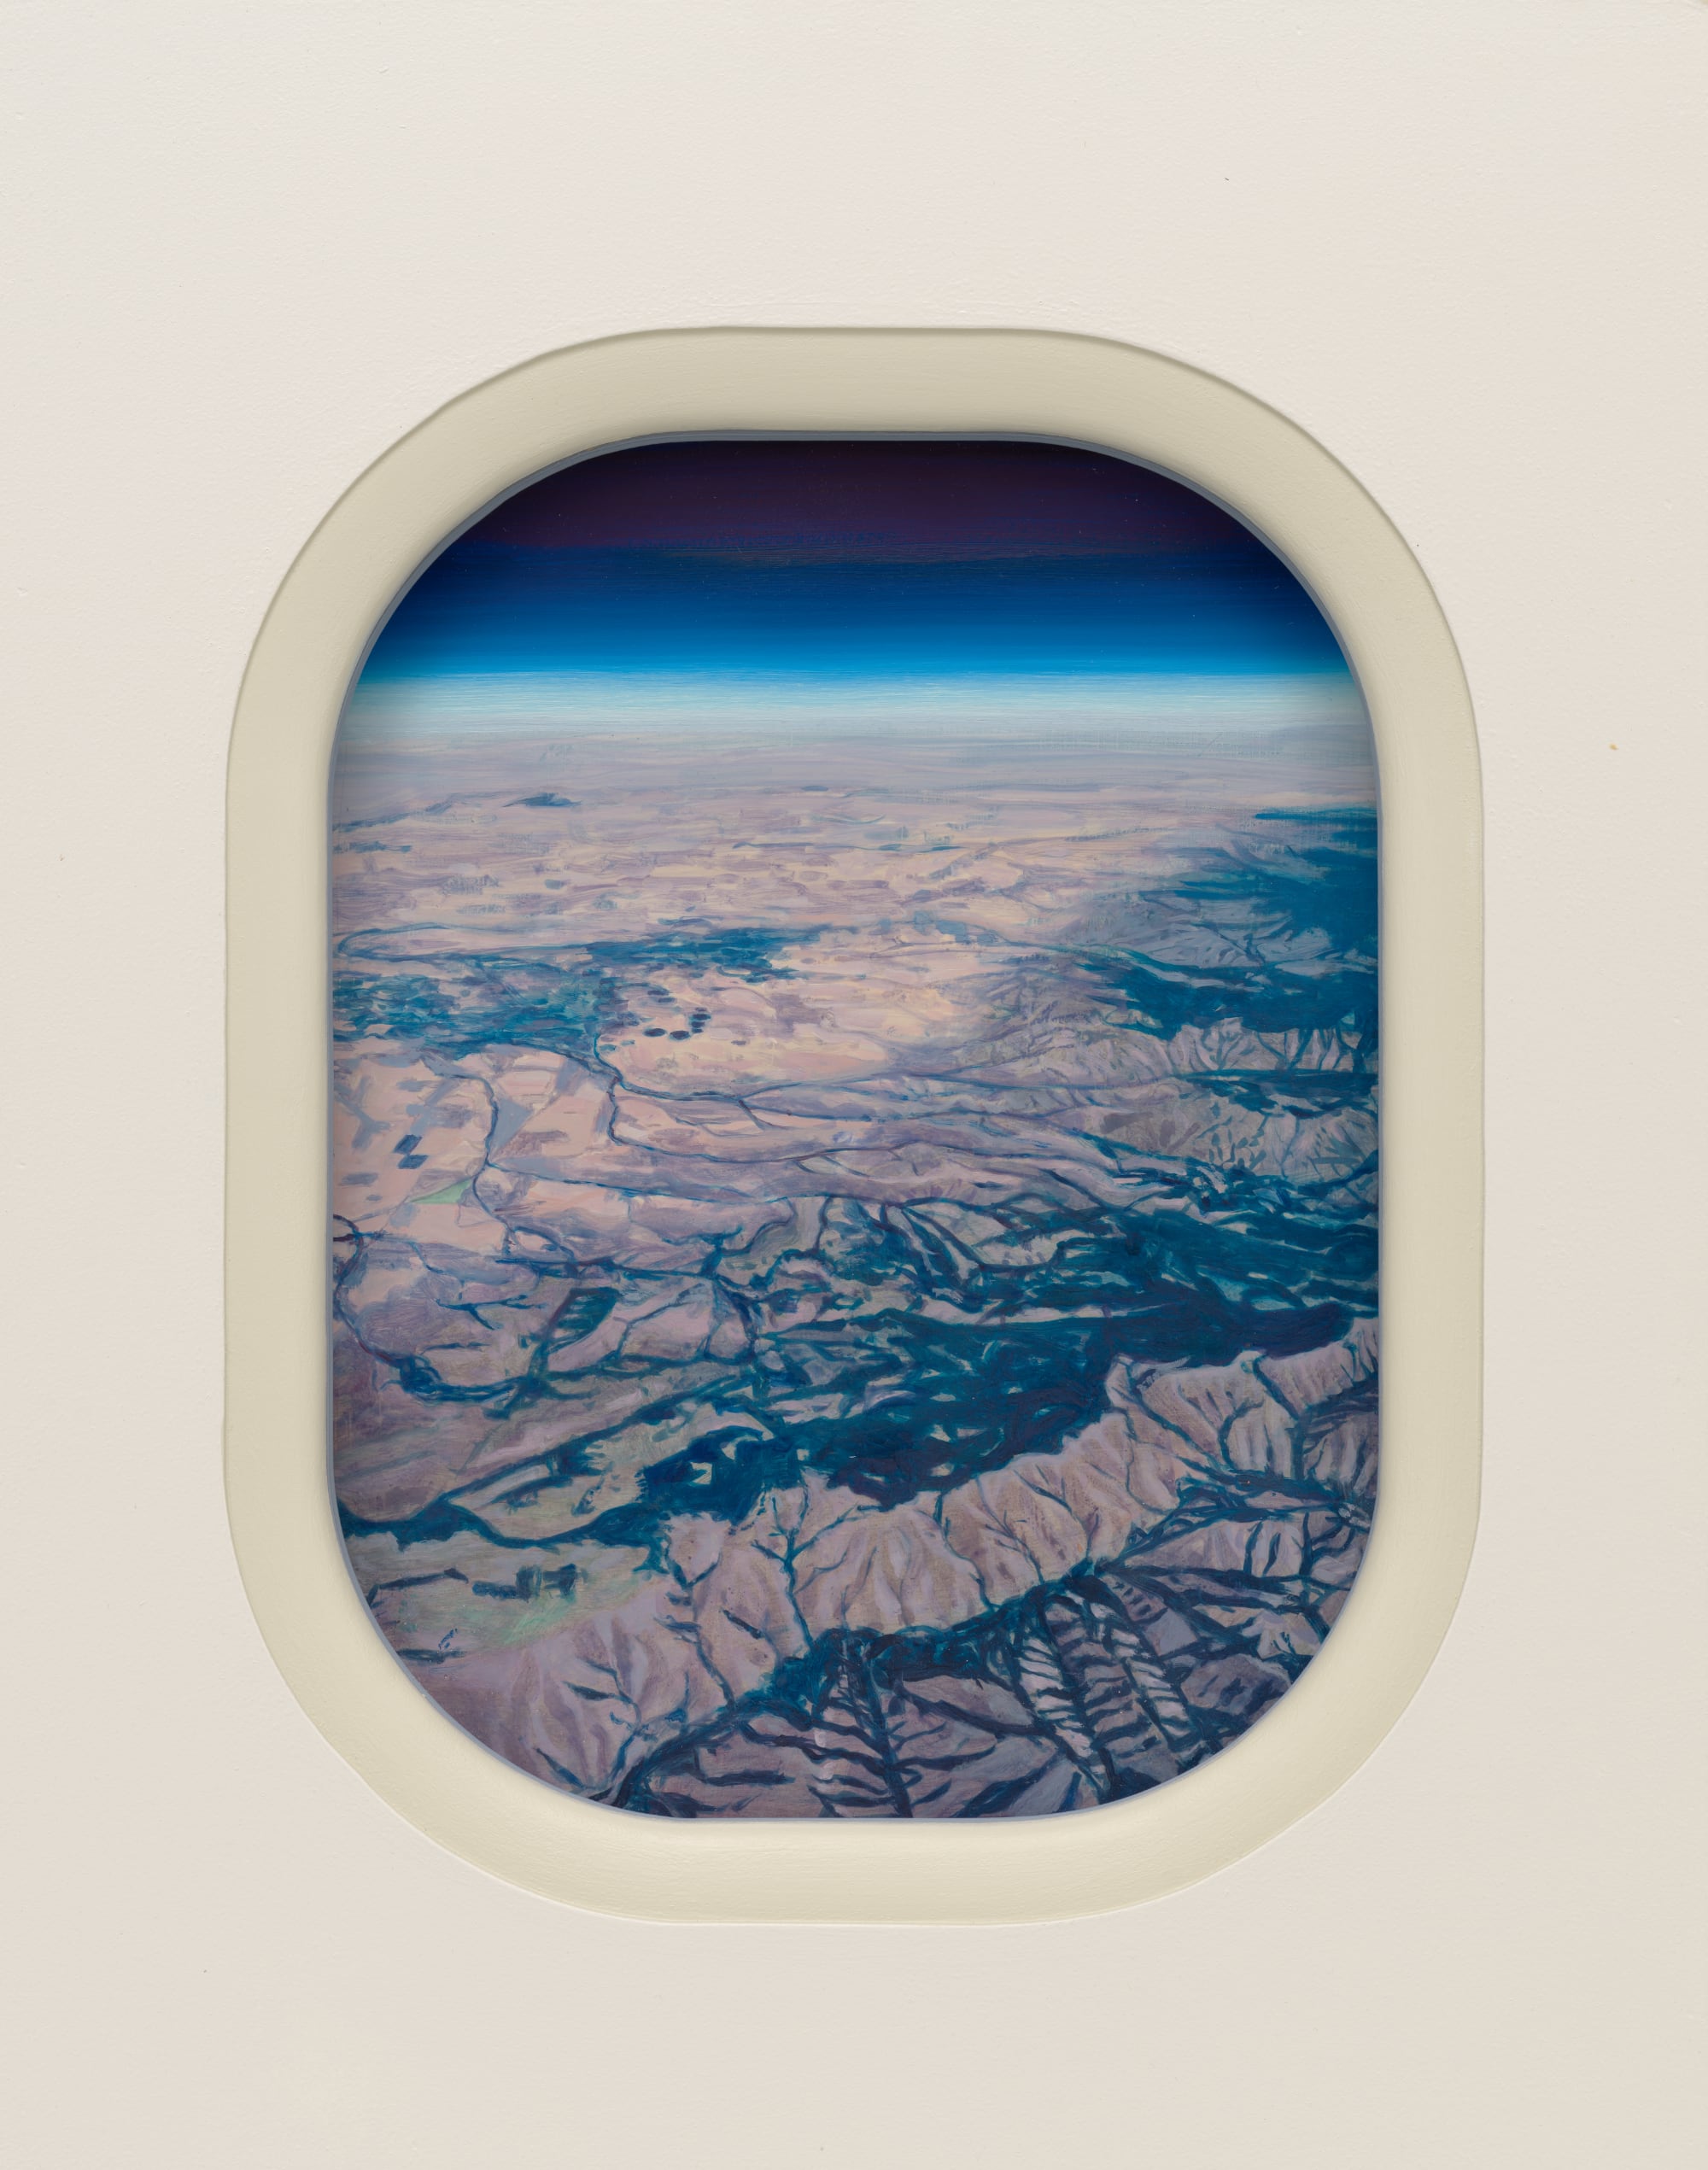 a desert landscape painting through an airplane-like window